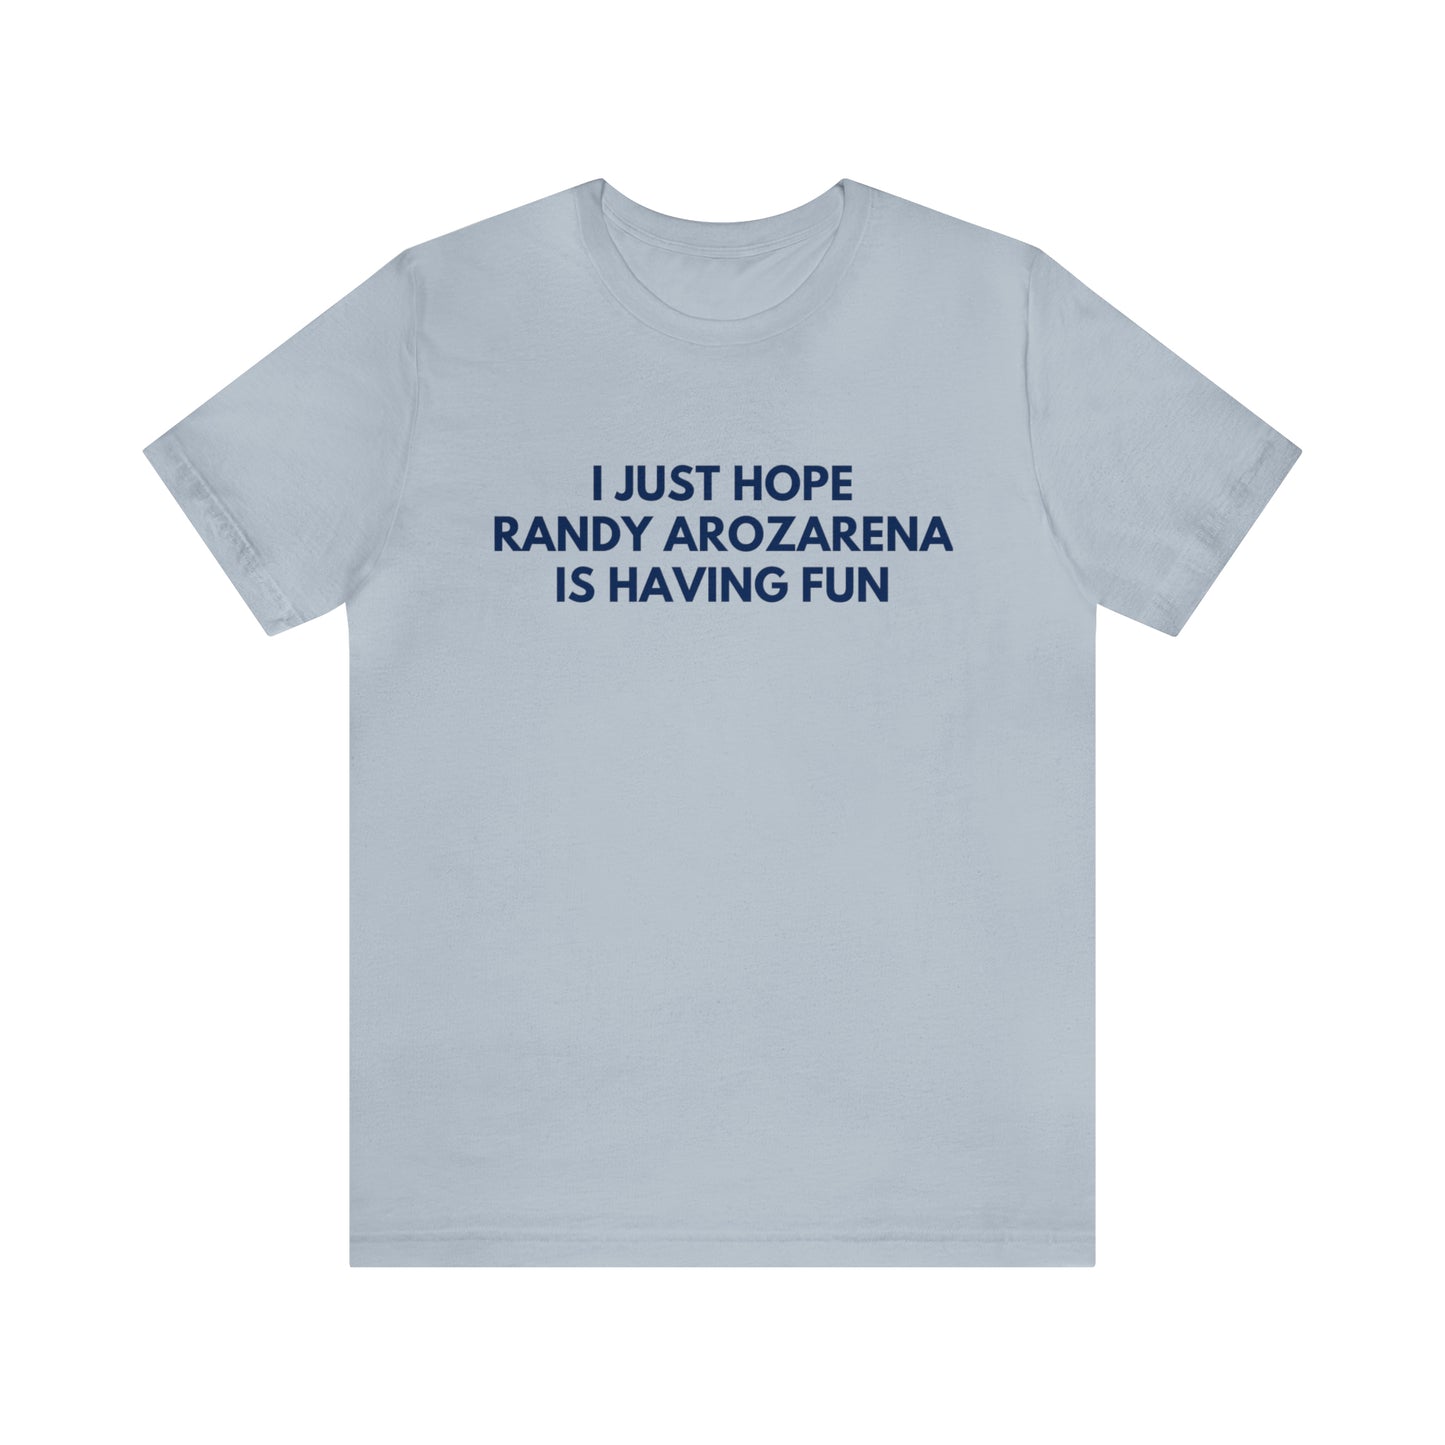 Randy Arozarena Having Fun - Unisex T-Shirt